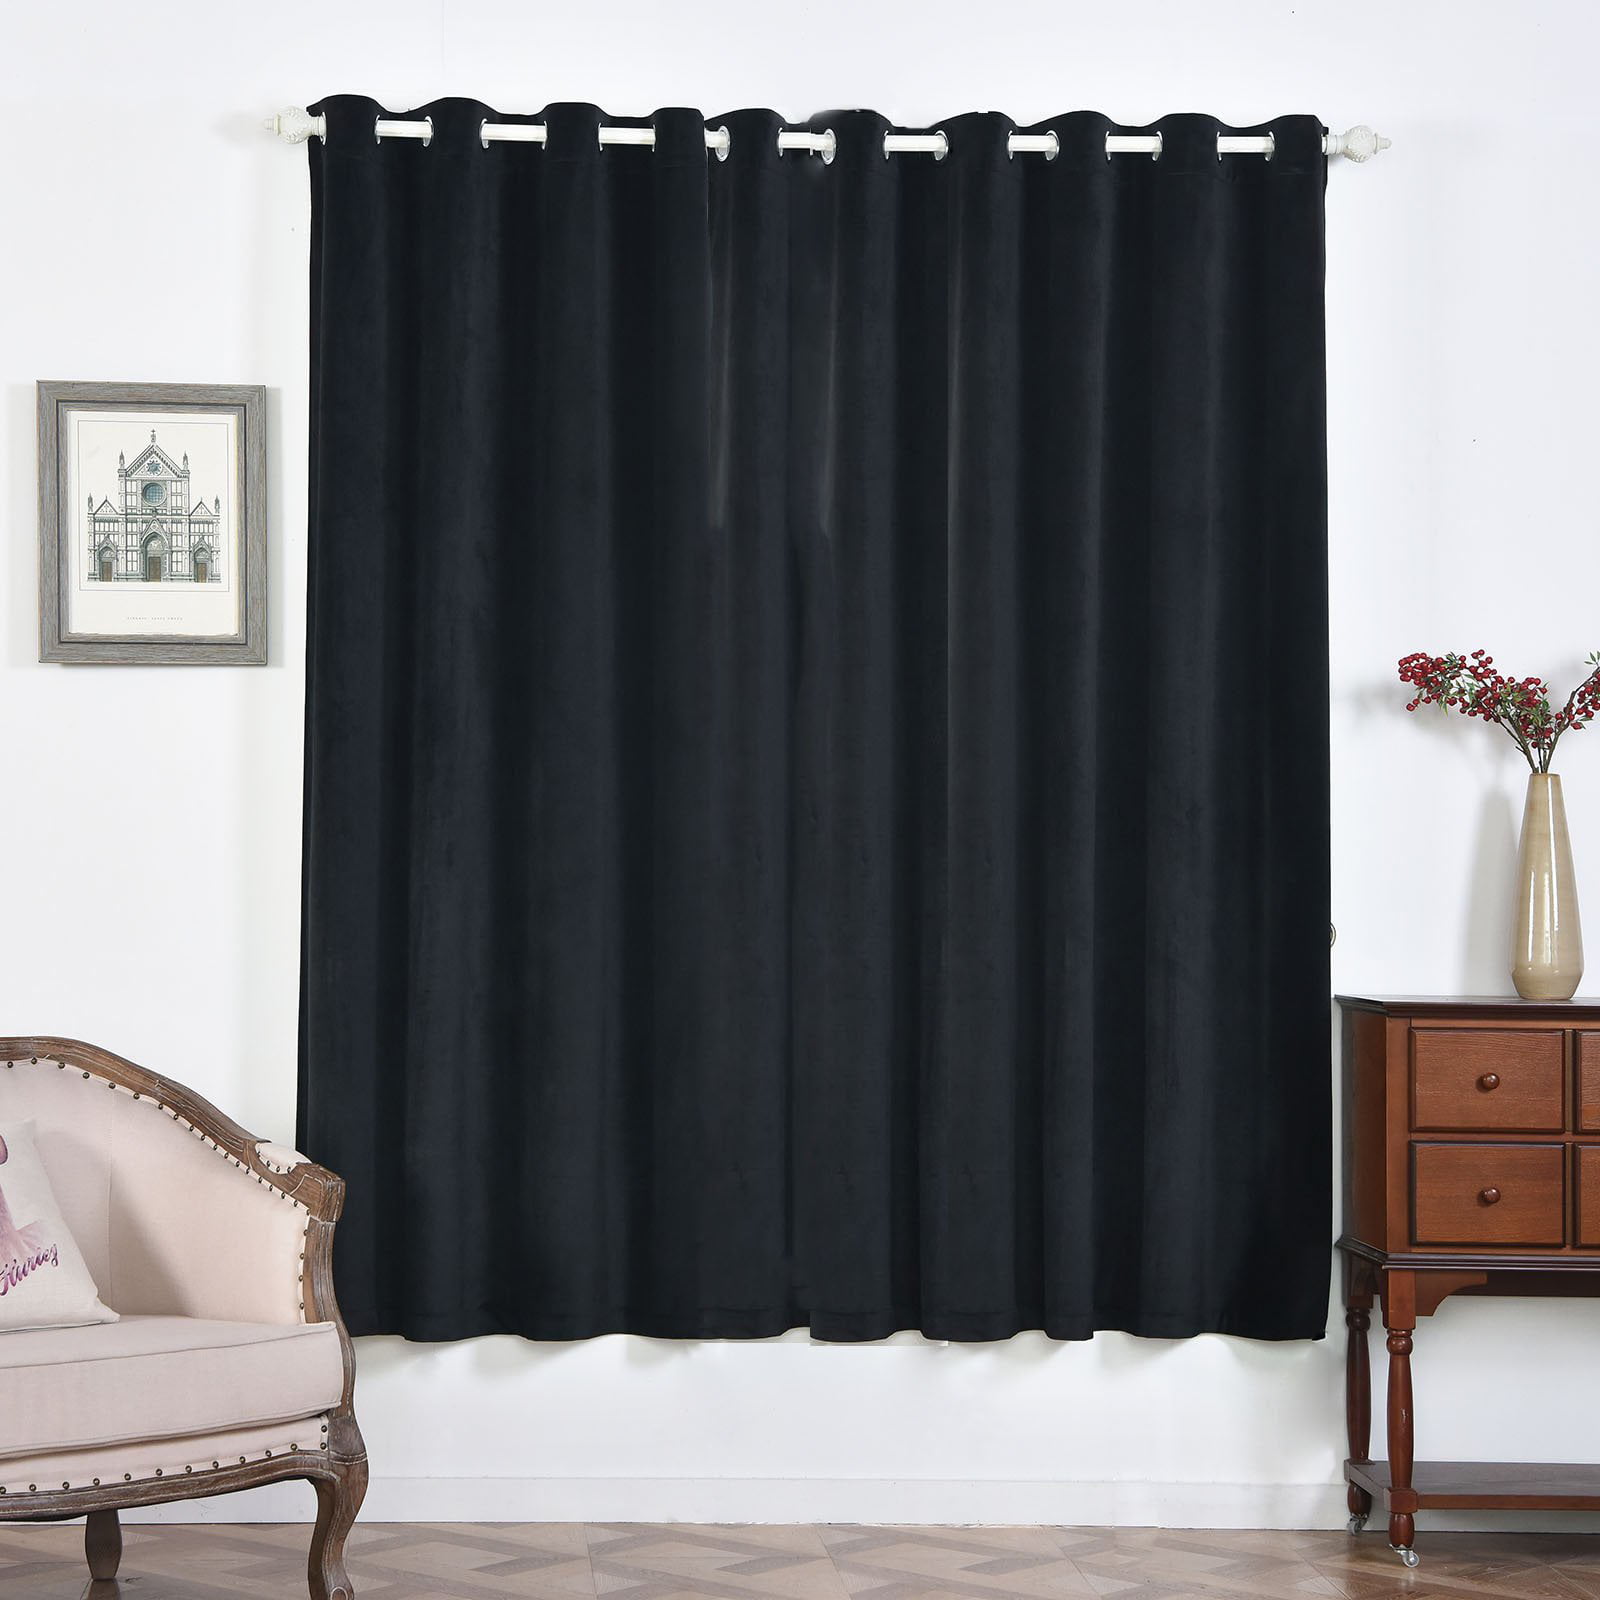 Efavormart 2 Panels Blackout Curtains Premium Velvet Thermal Insulated